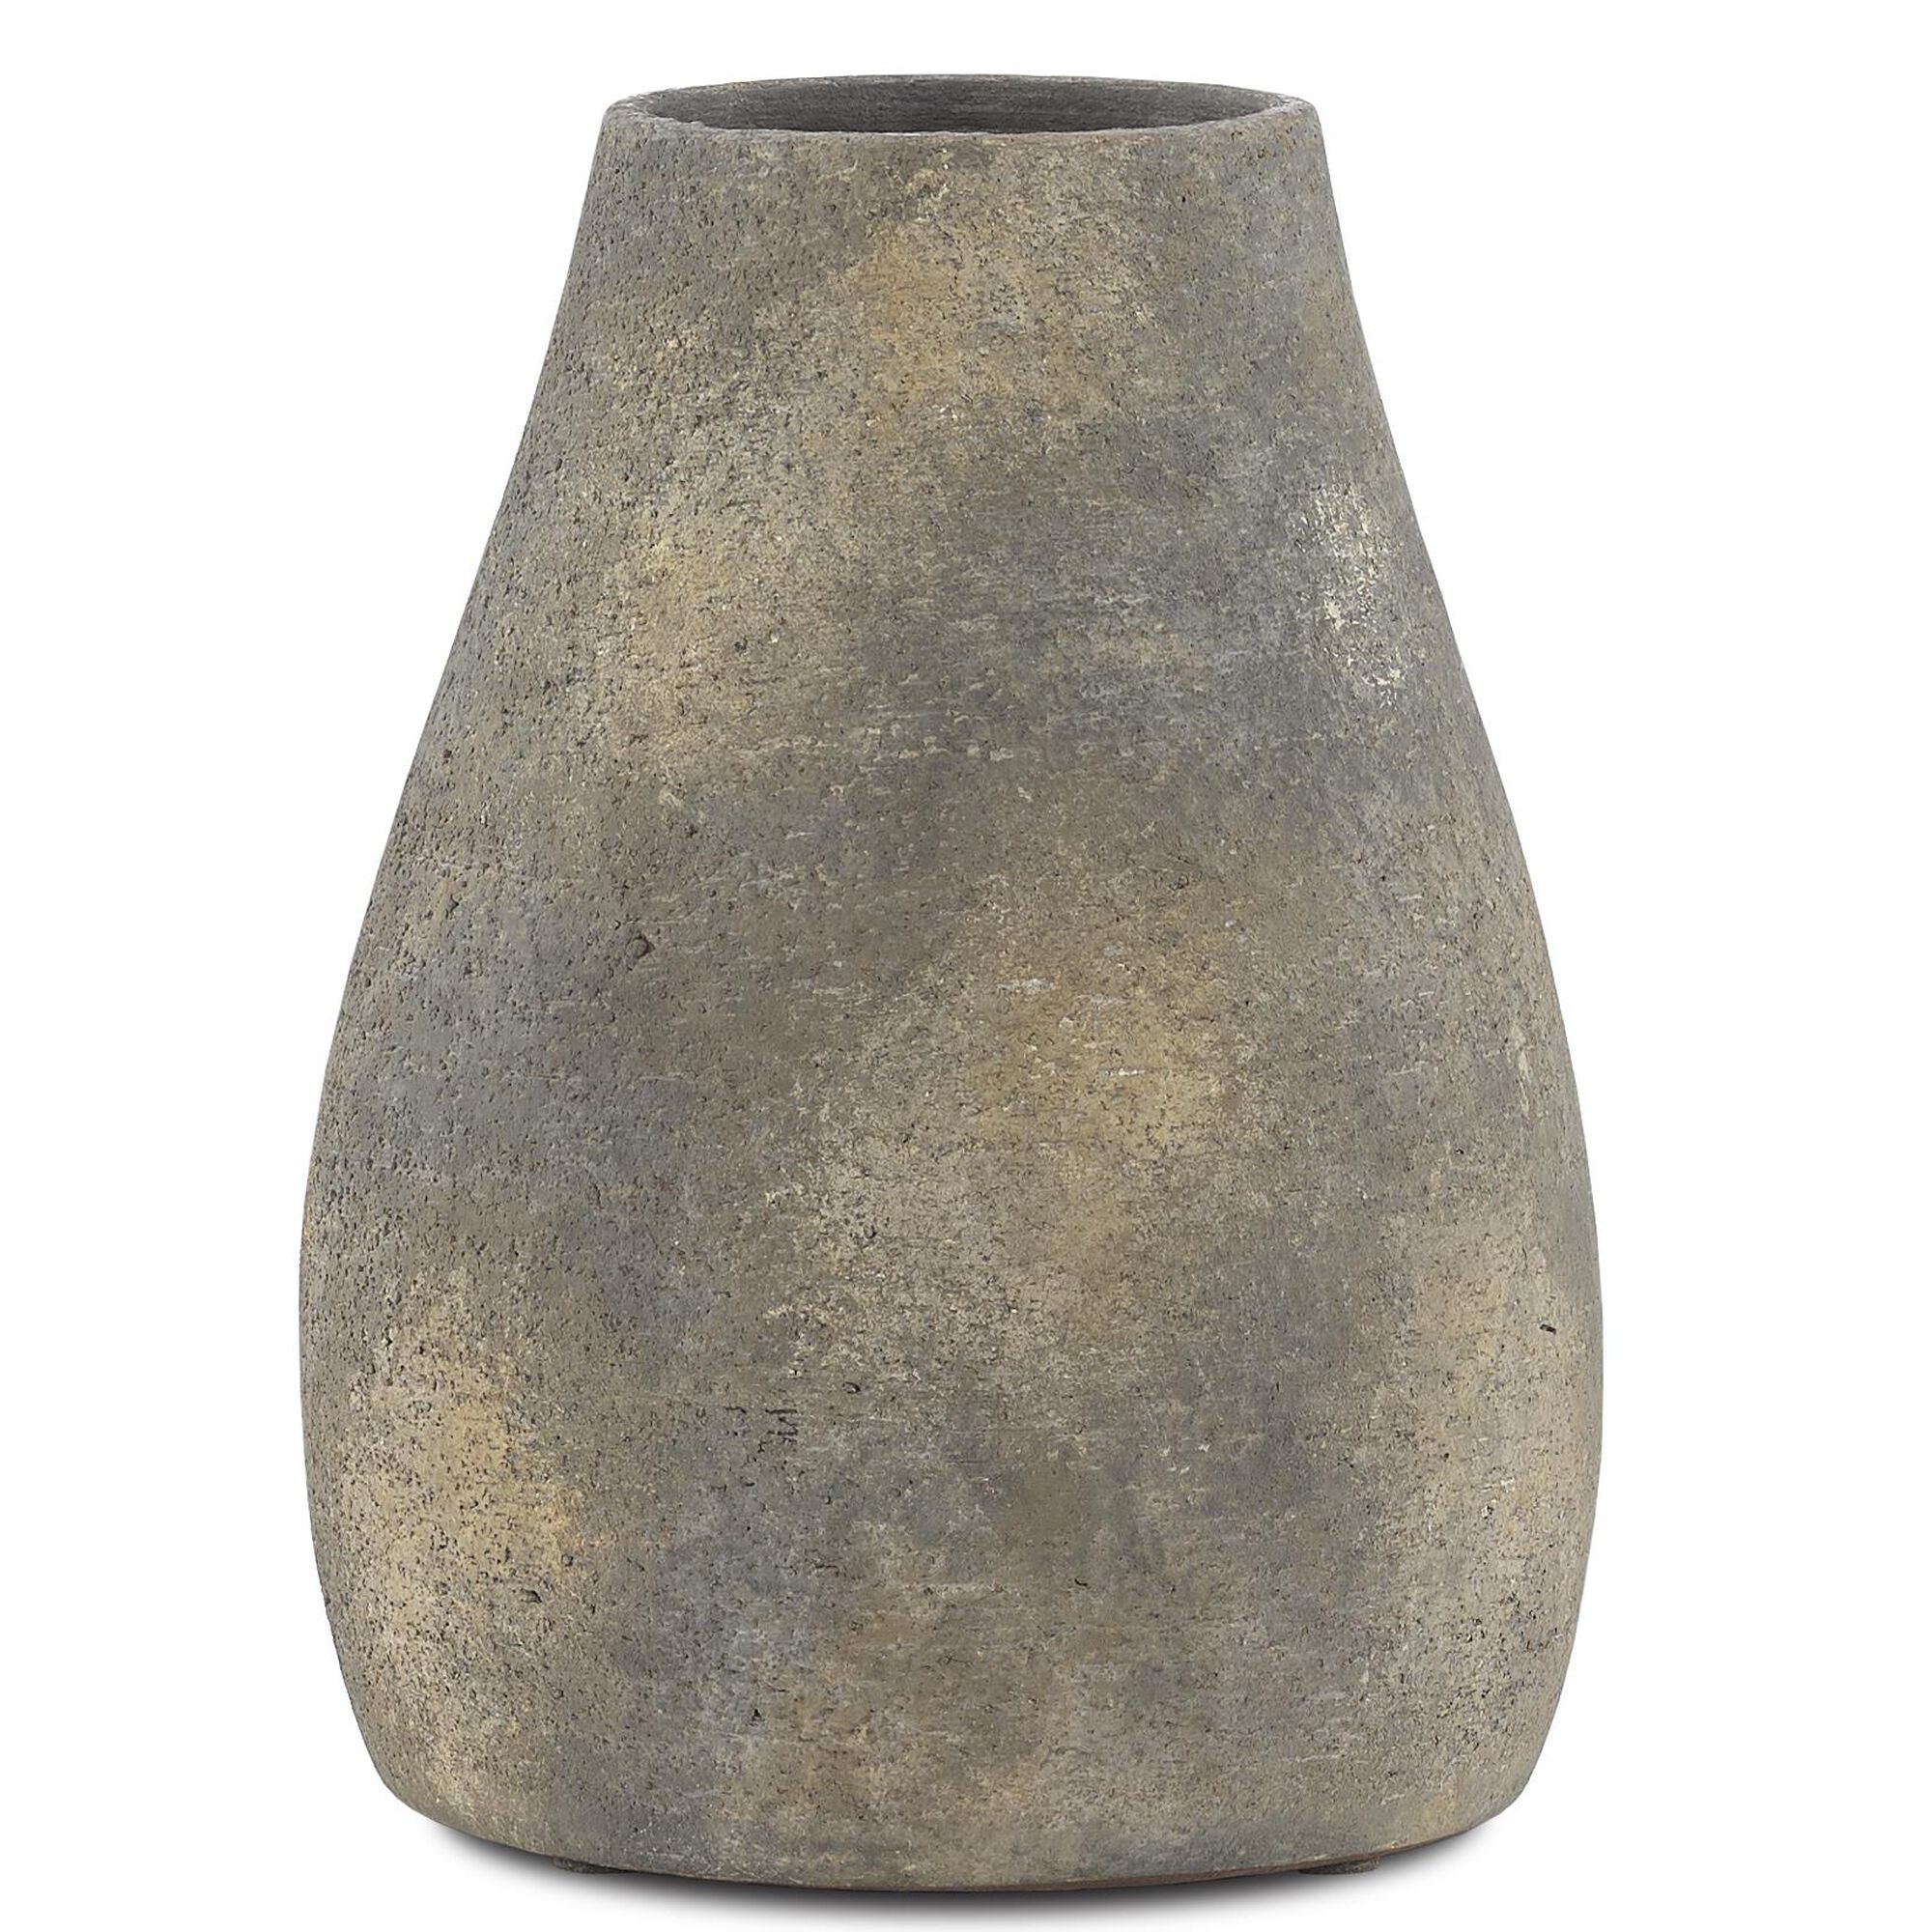 Vesuvius Large Vase Vase-Urn by Currey and Company | Capitol Lighting 1800lighting.com